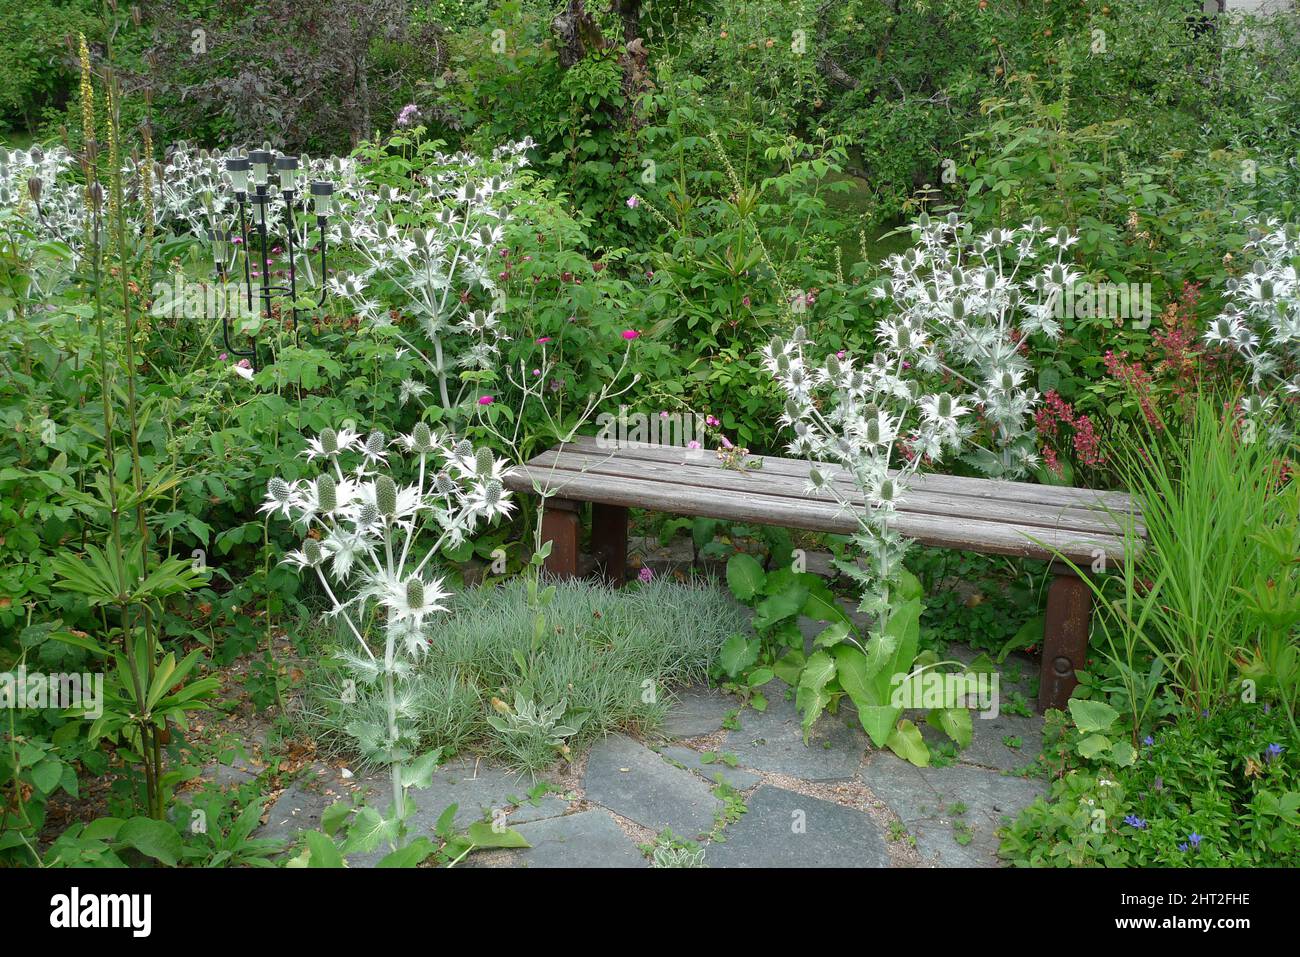 Wooden bench in the garden Stock Photo